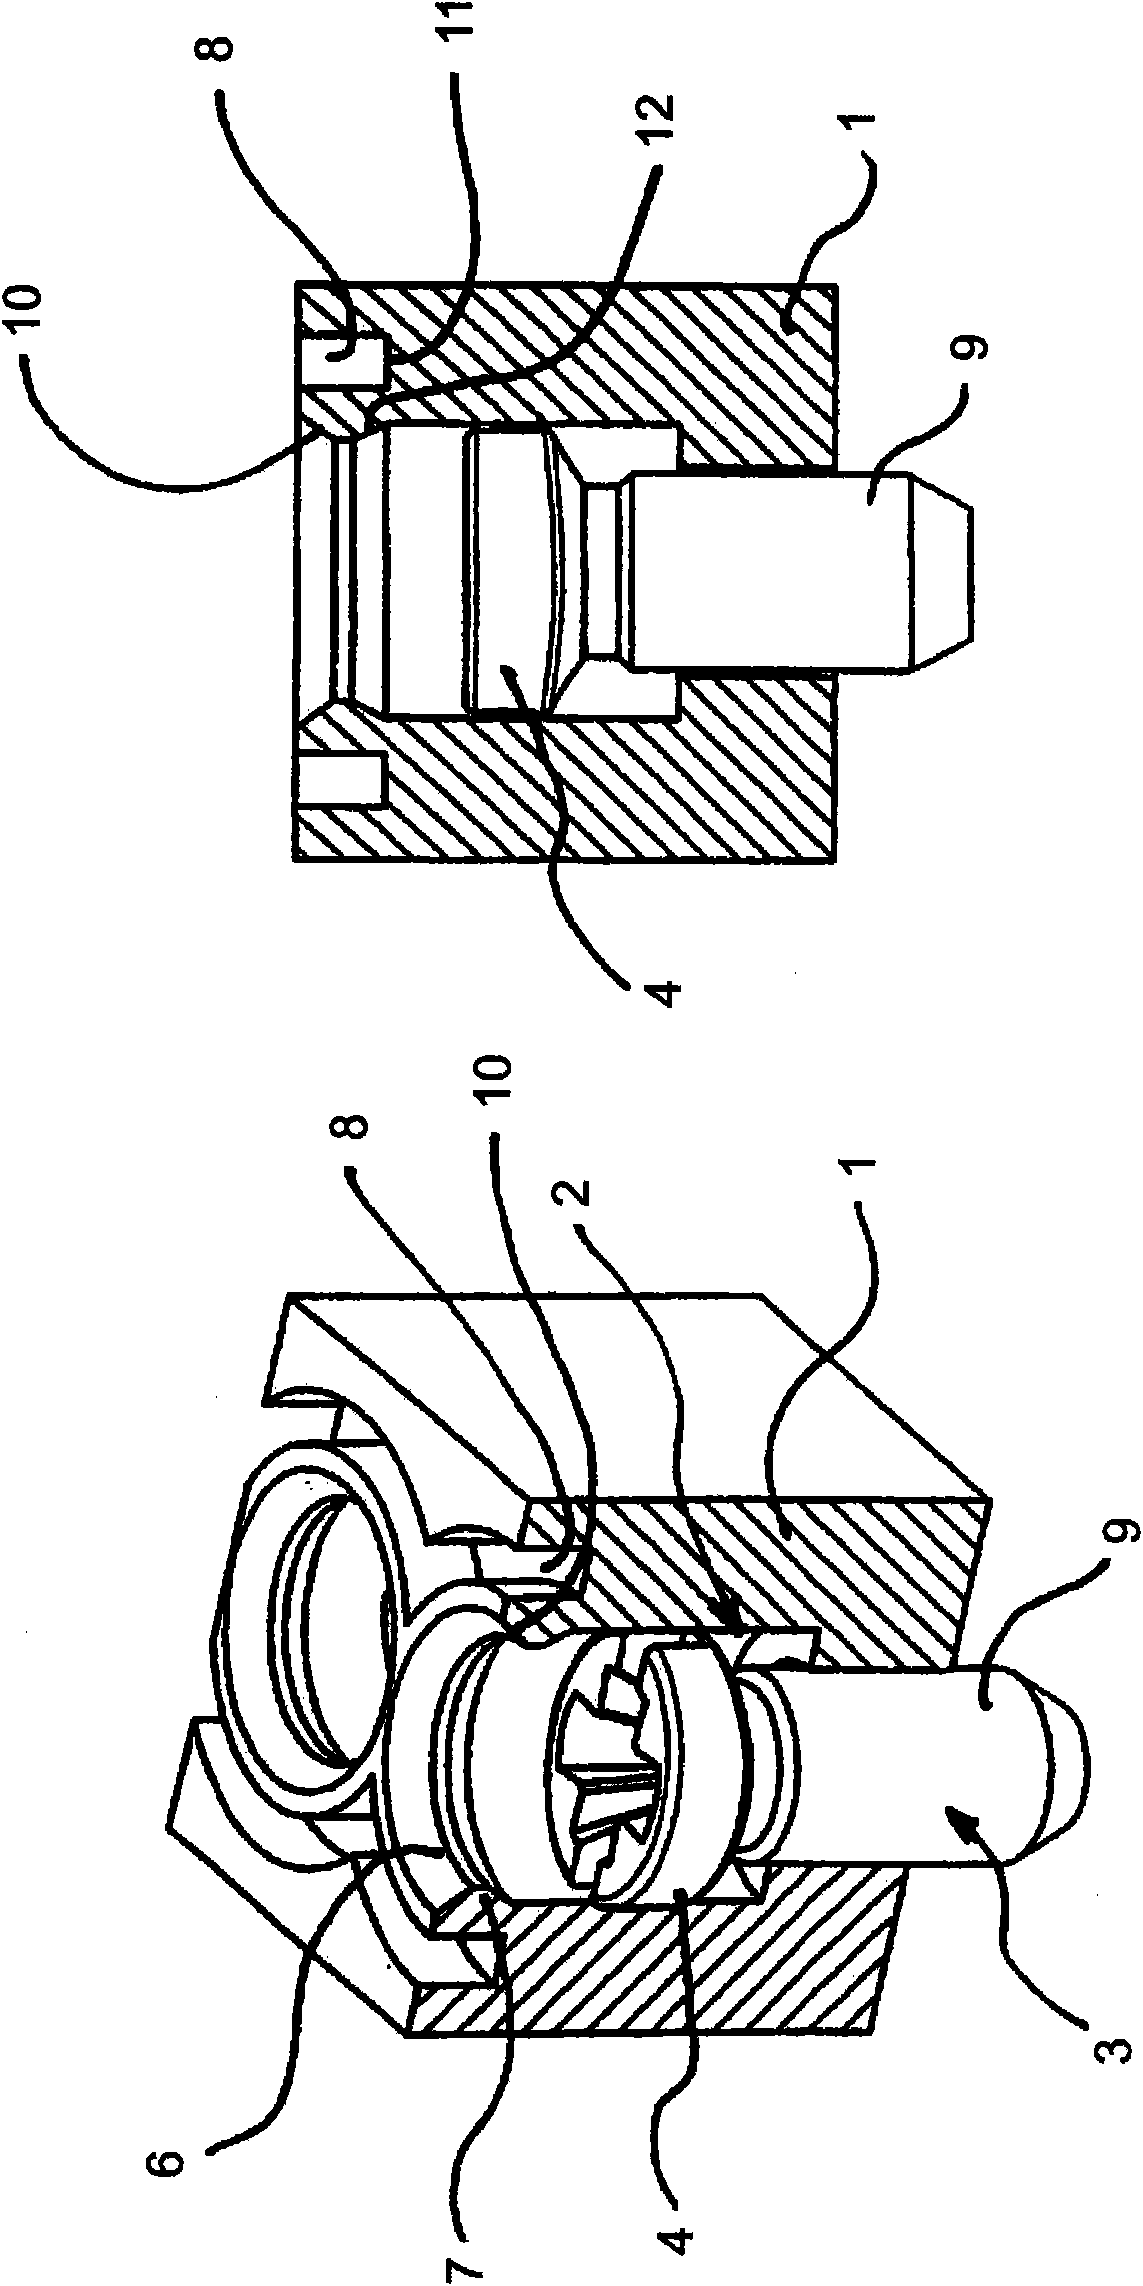 Arrangement for screw locking electric connecting terminals